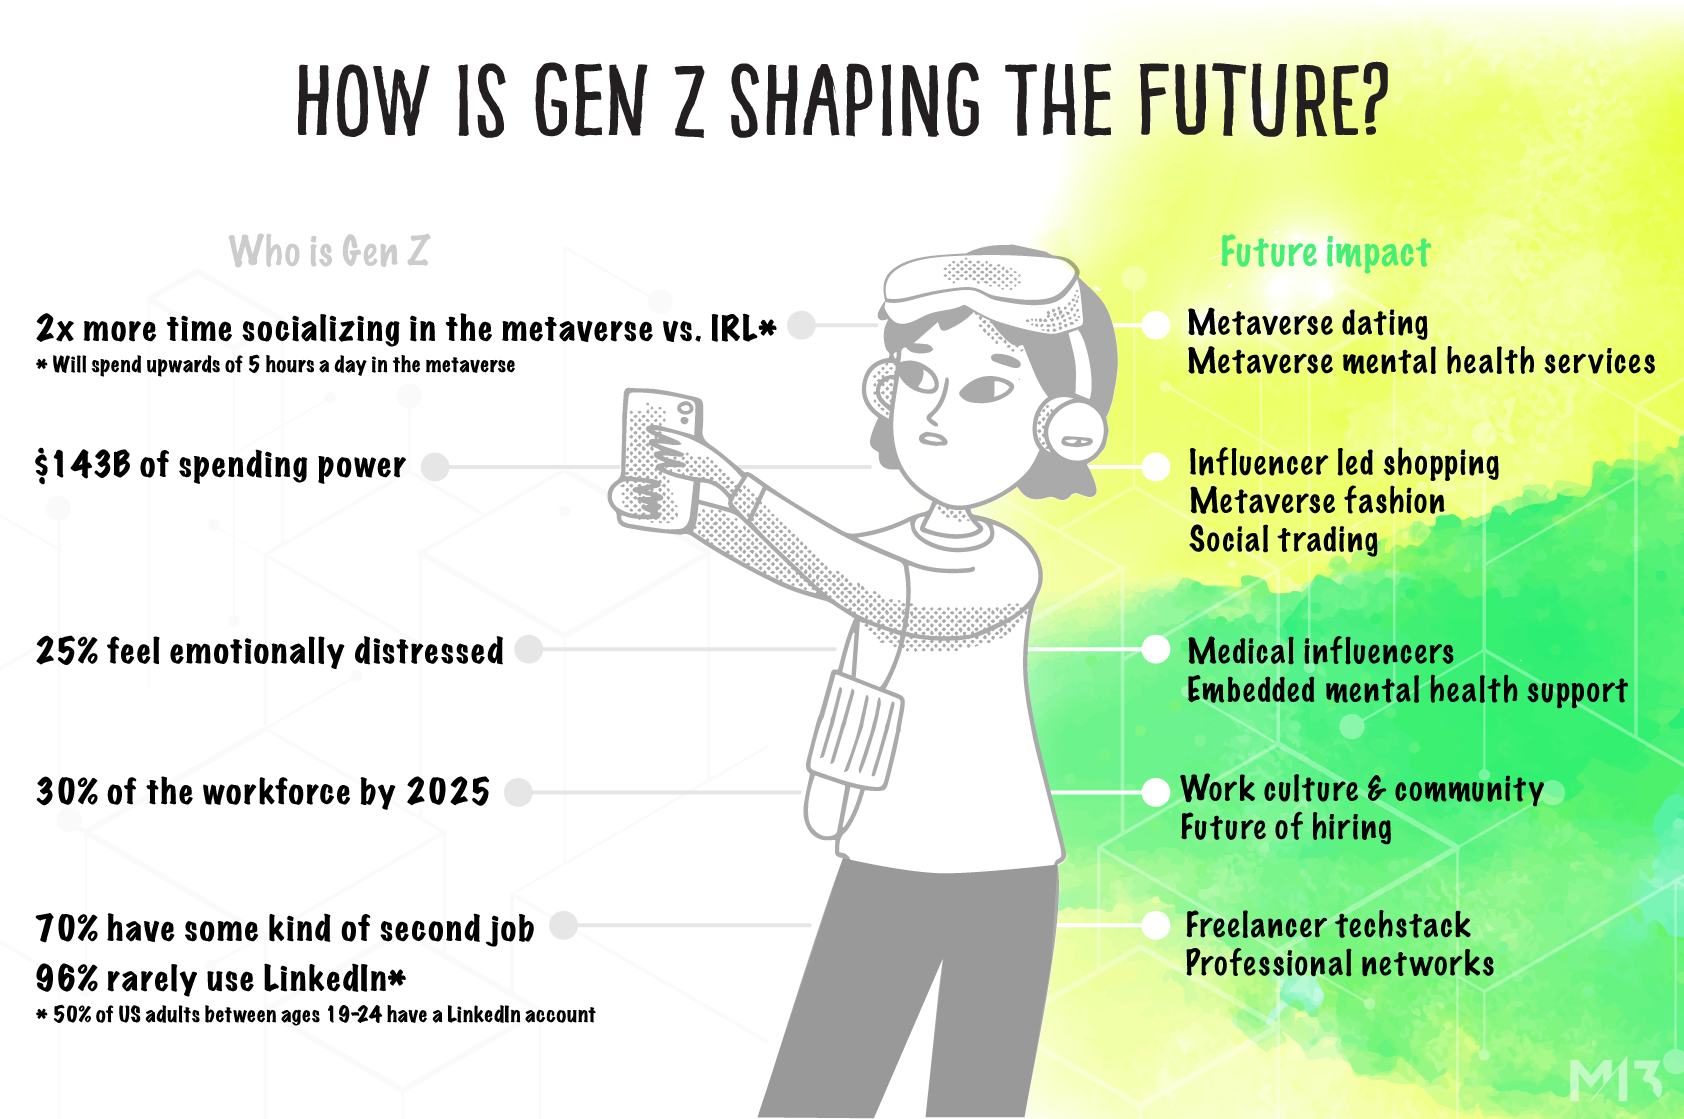 Gen Z Impact on the Future